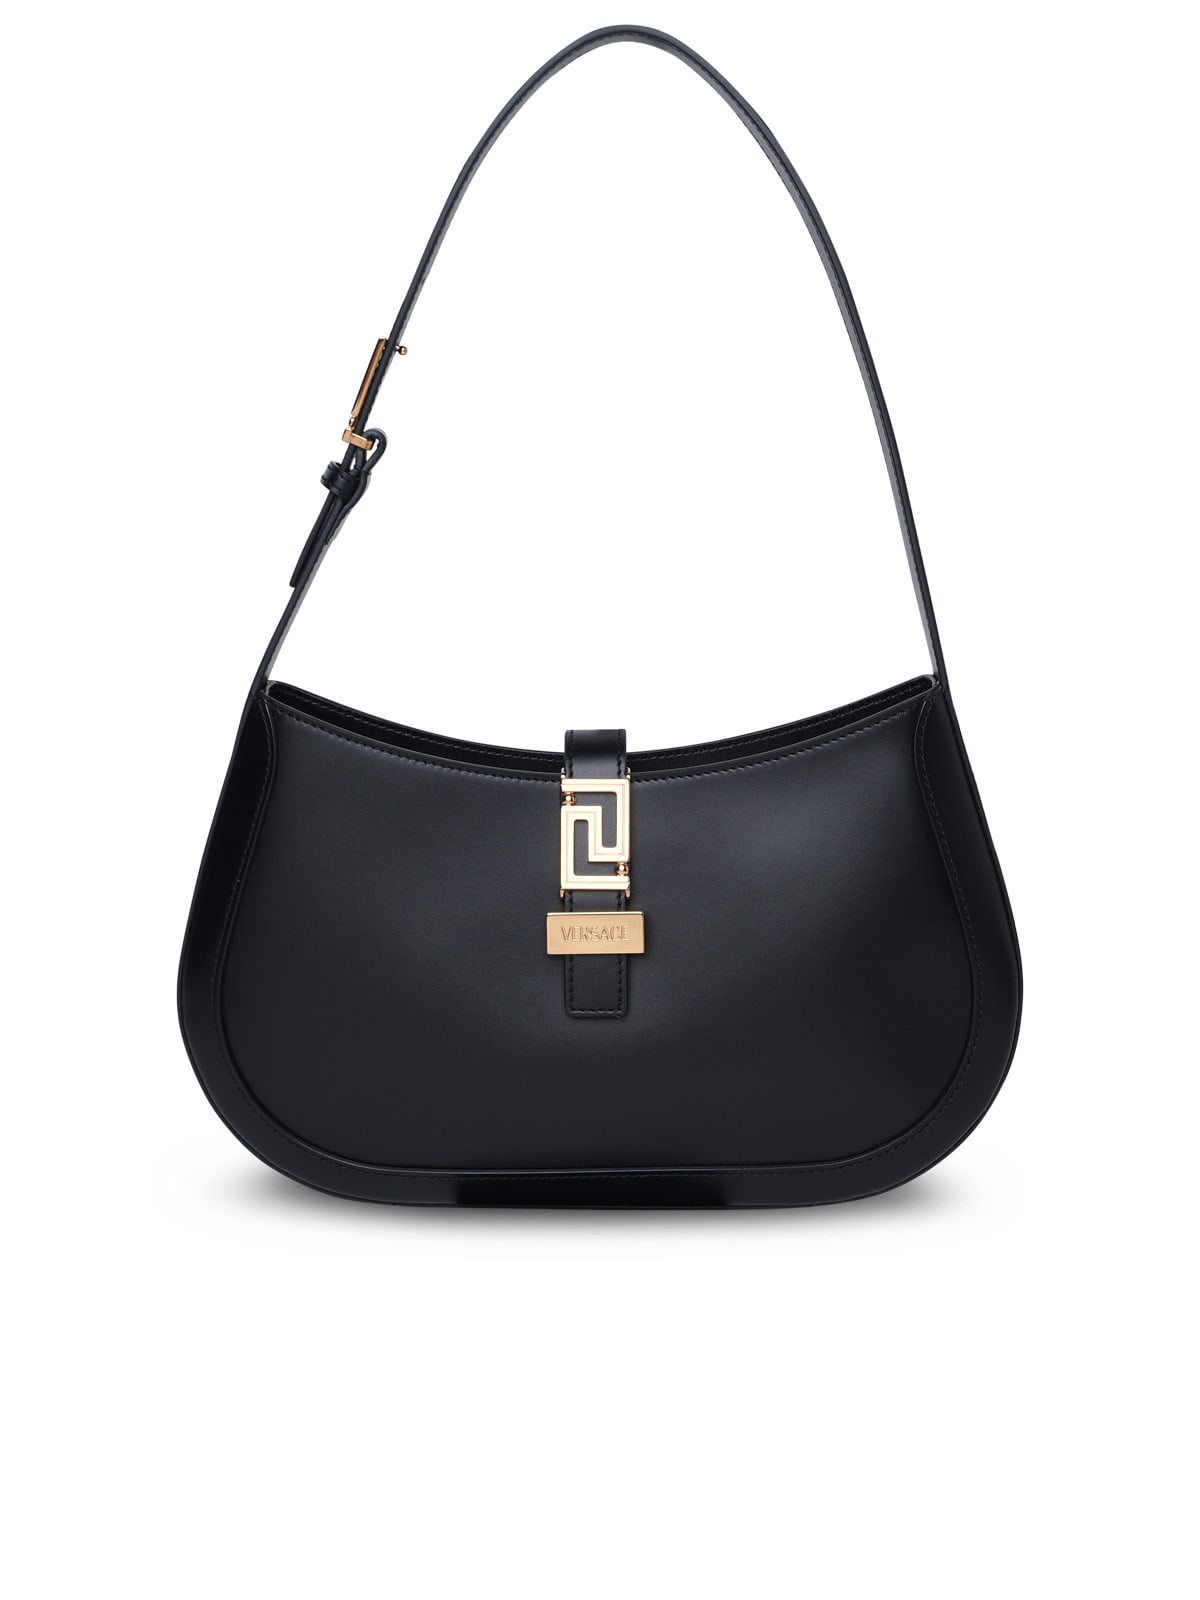 Shop Versace Black Leather Bag